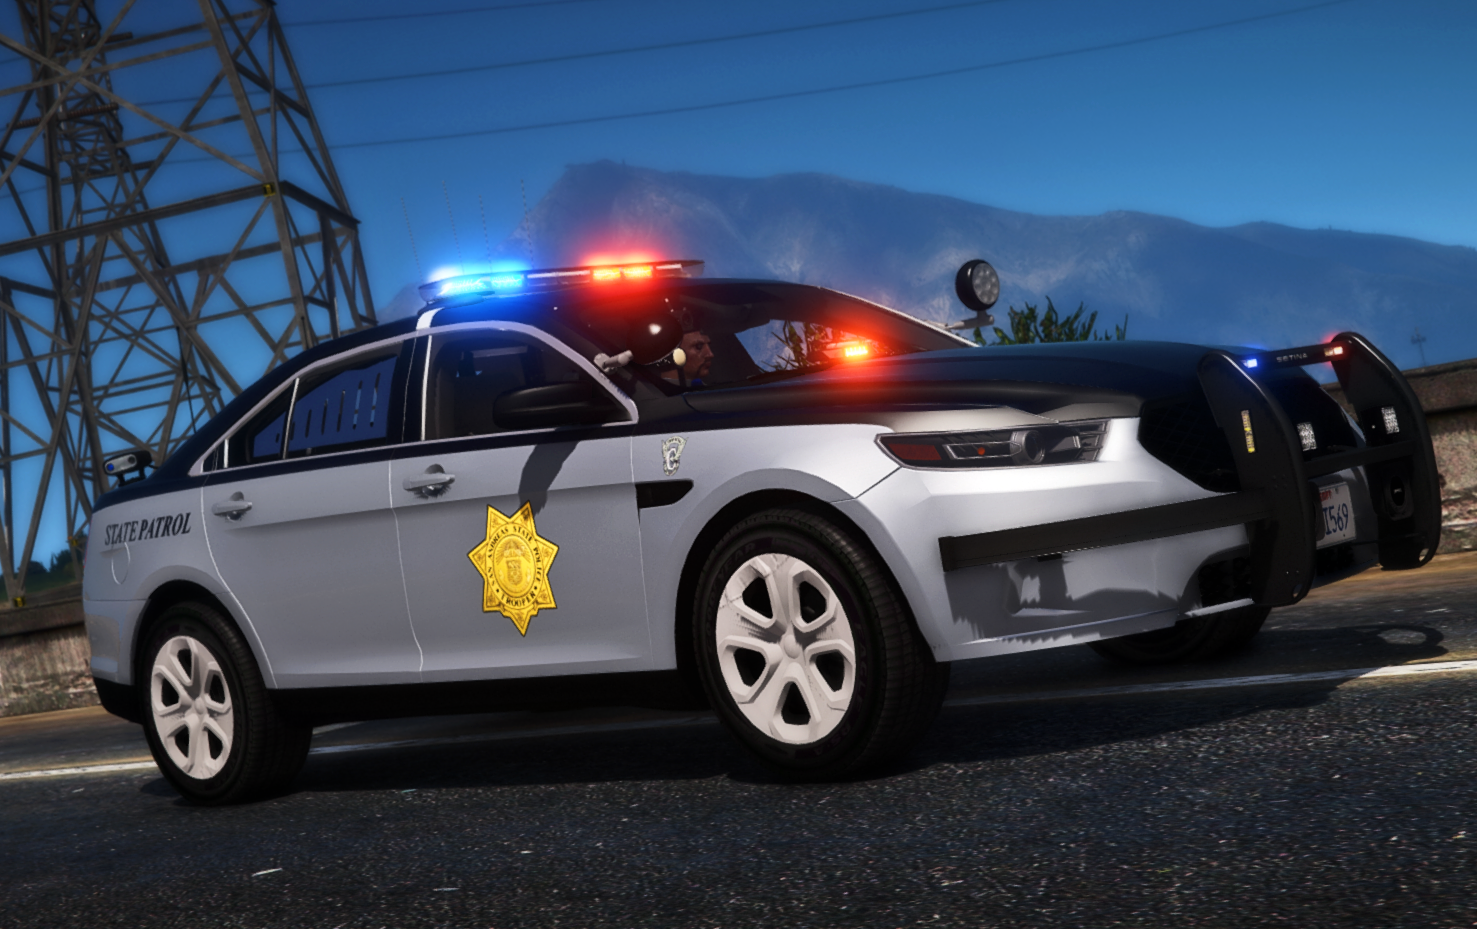 2015 Chevrolet Camaro Z28 Policía Estatal Guanajuato Mexico Livery.  Guanajuato State Police Beta »  - FS19, FS17, ETS 2 mods